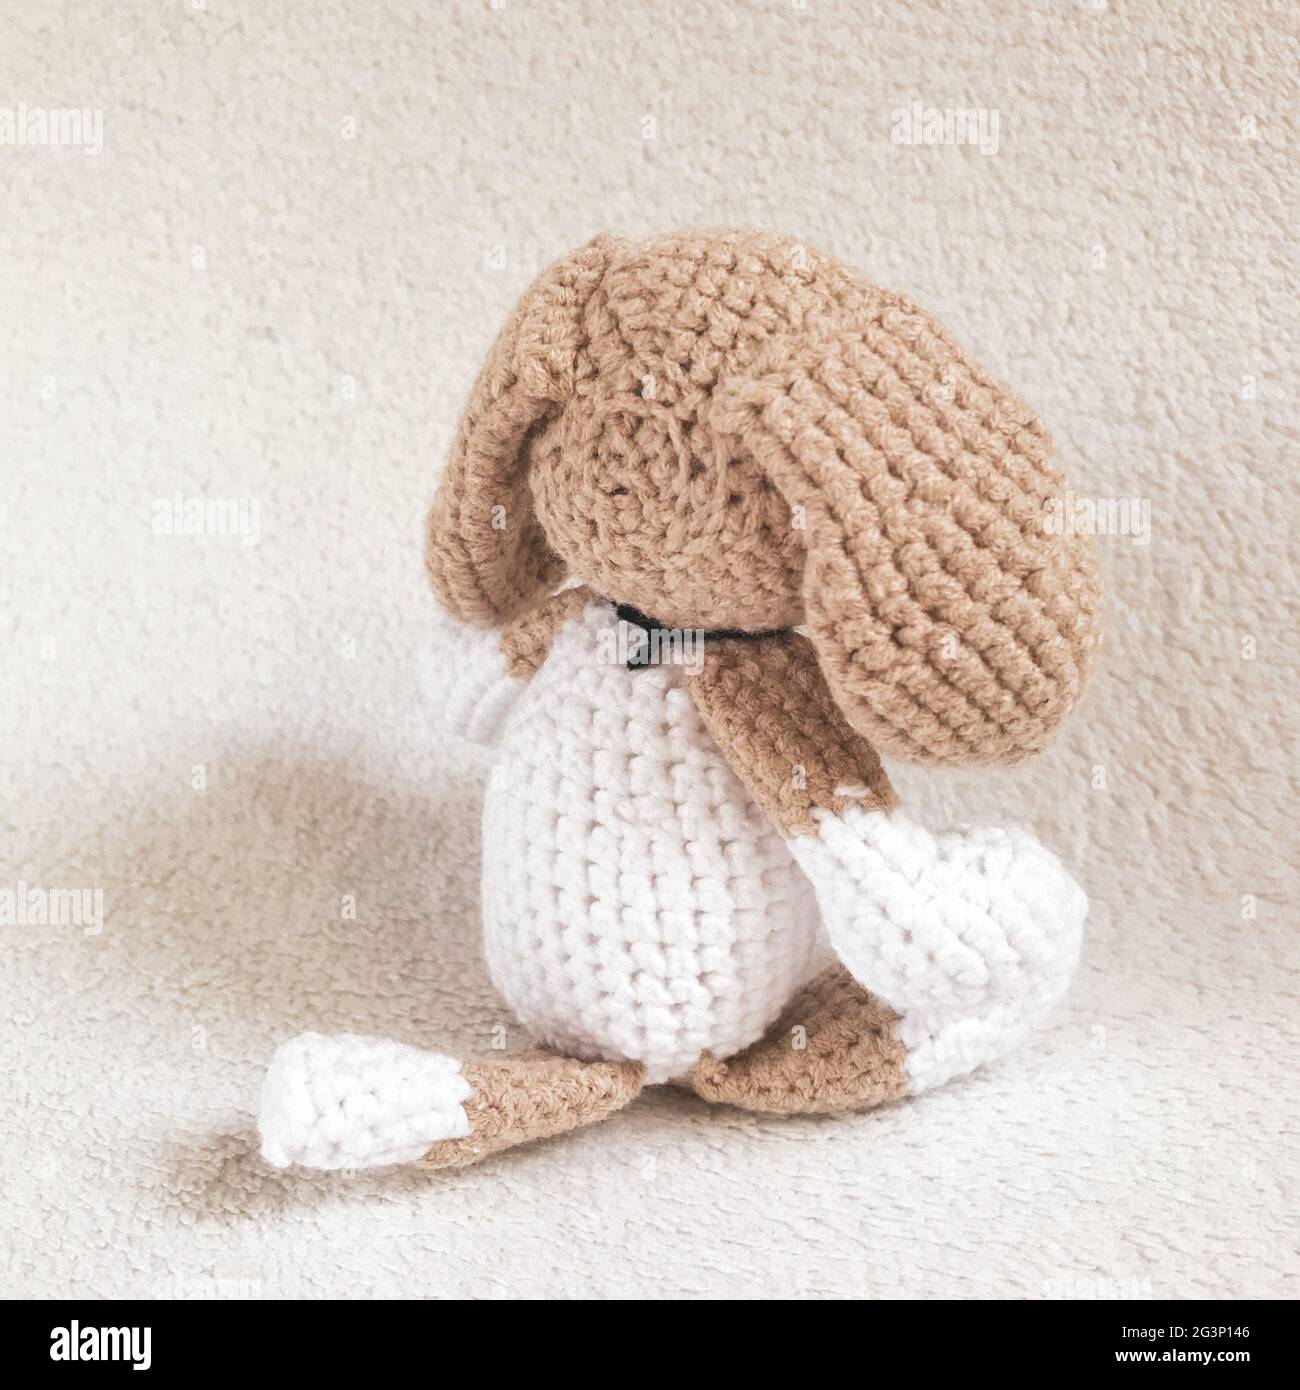 Handmade Crochet Animal Toy - Amigurumi Stuffed Toy - Puppy Dog Stock Photo